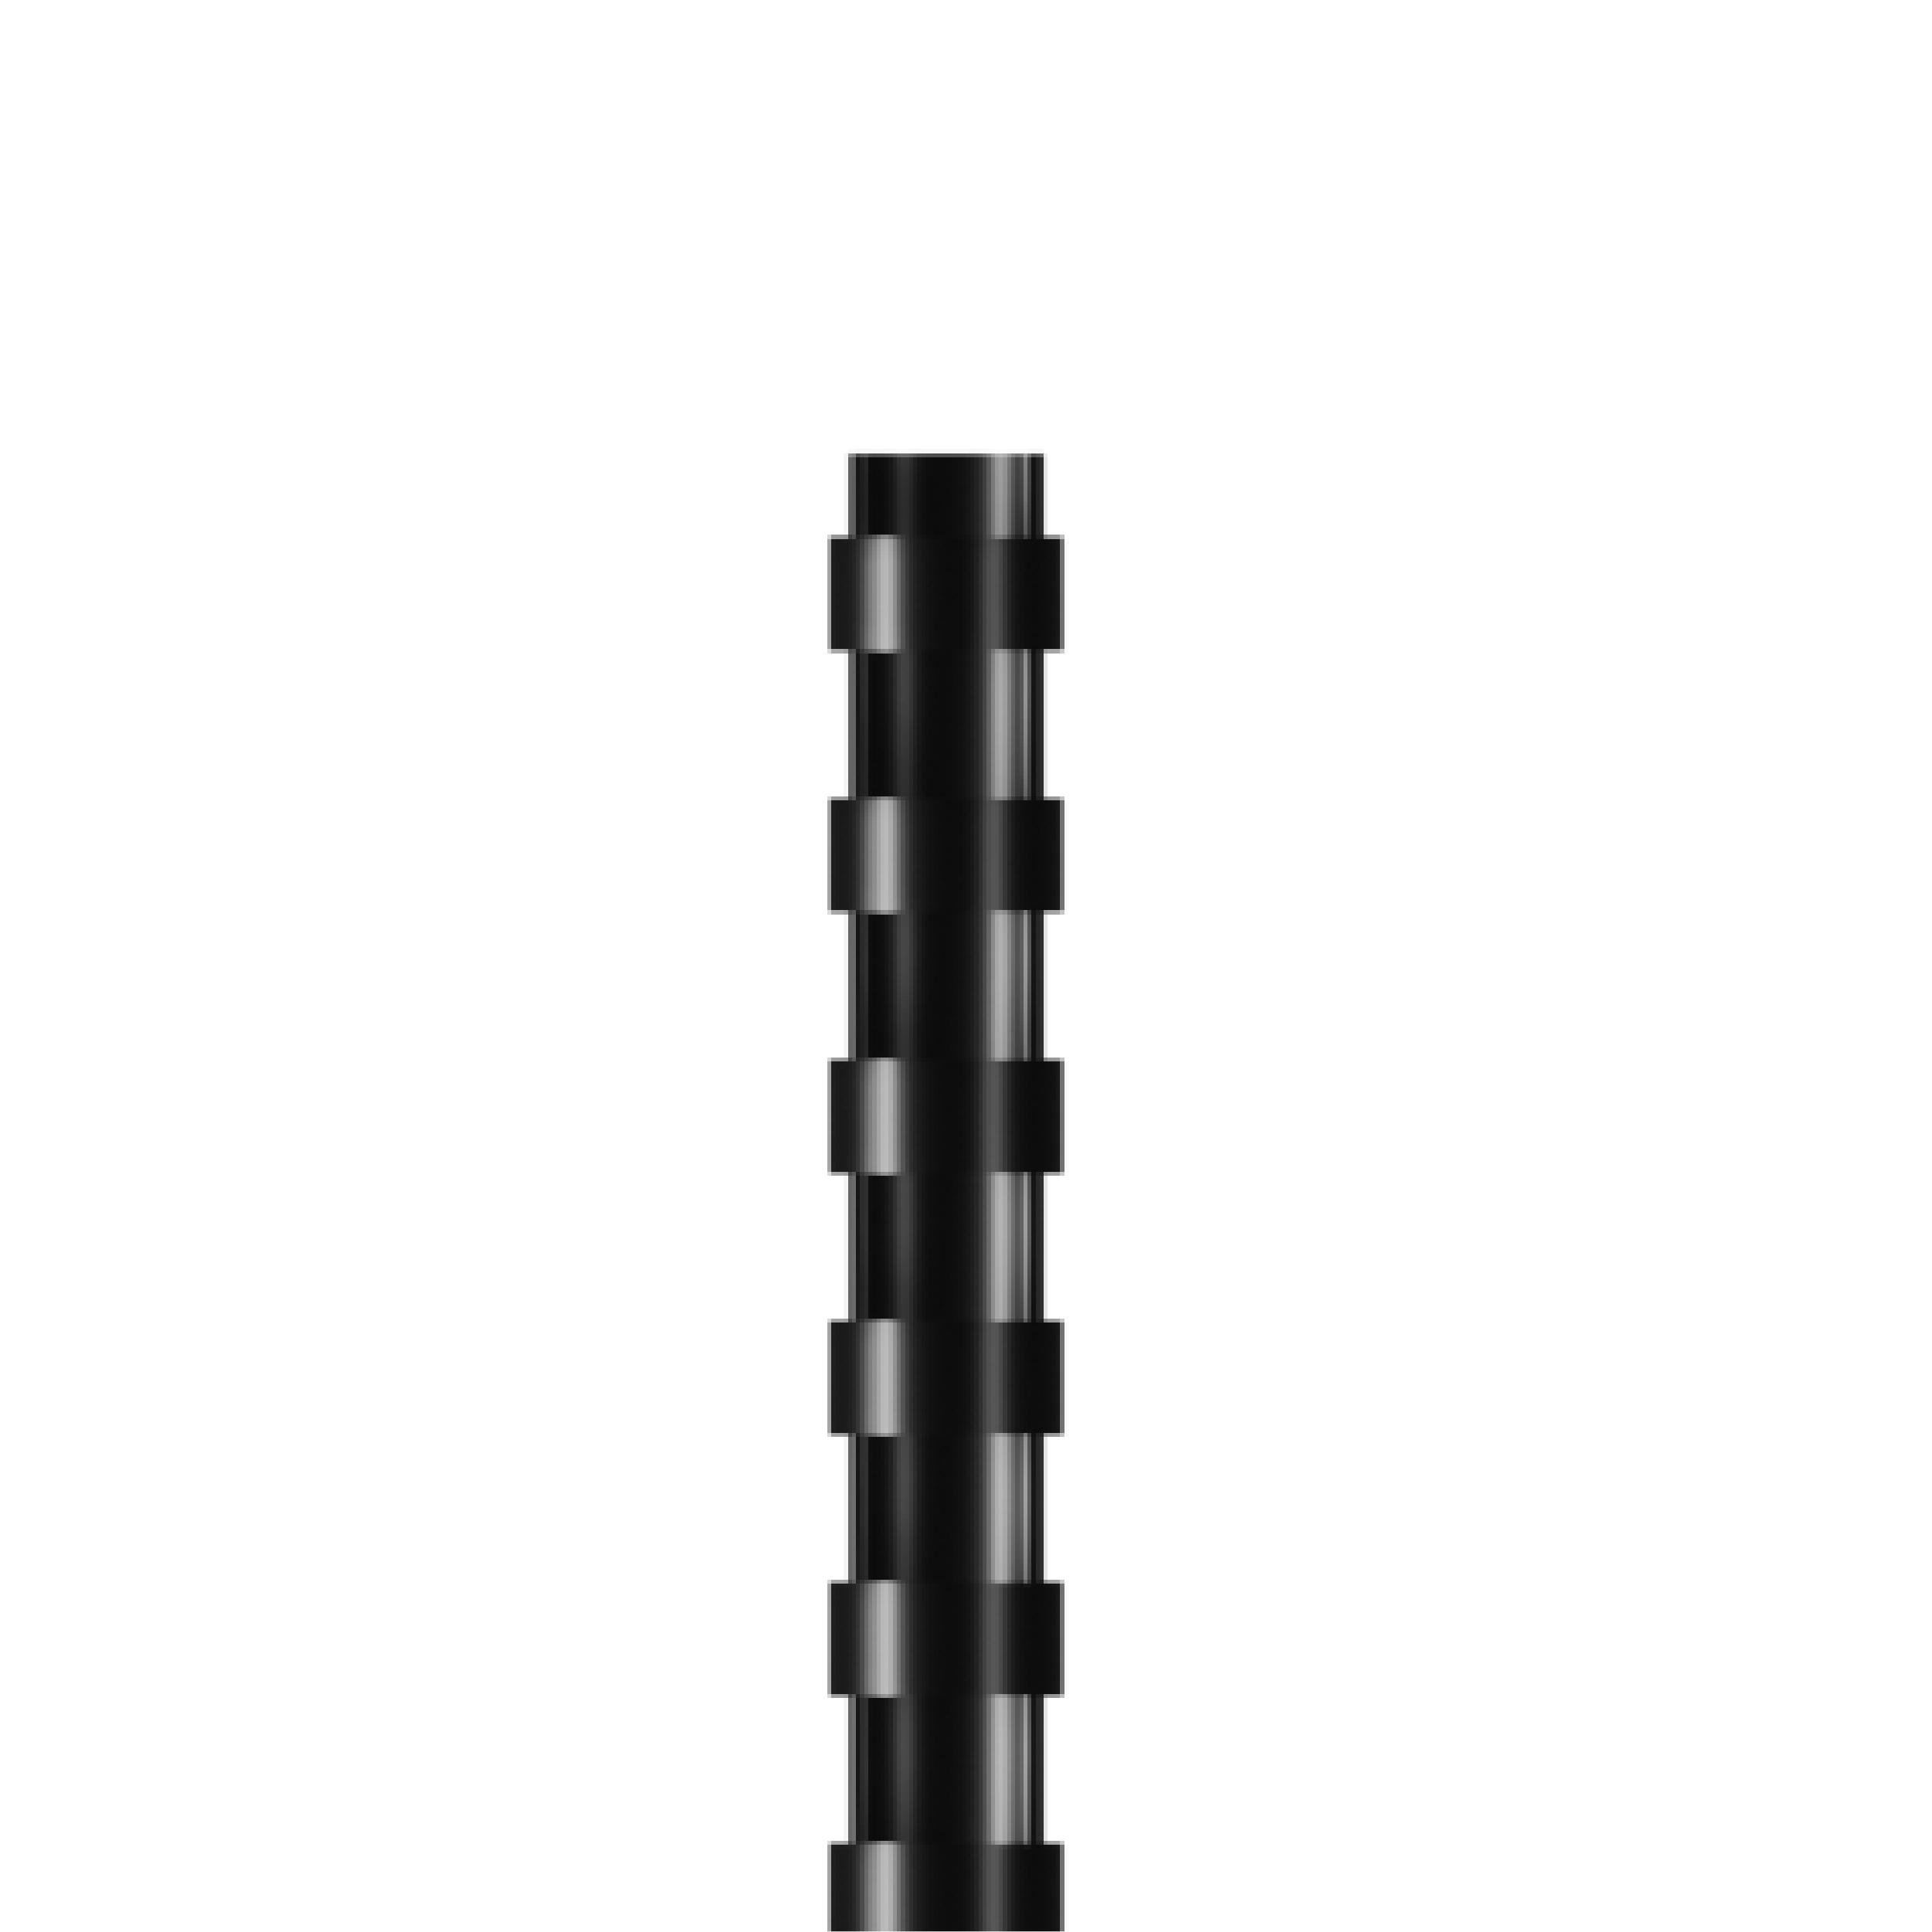 RAADO 12mm Plastic Spiral Binding Comb, Black